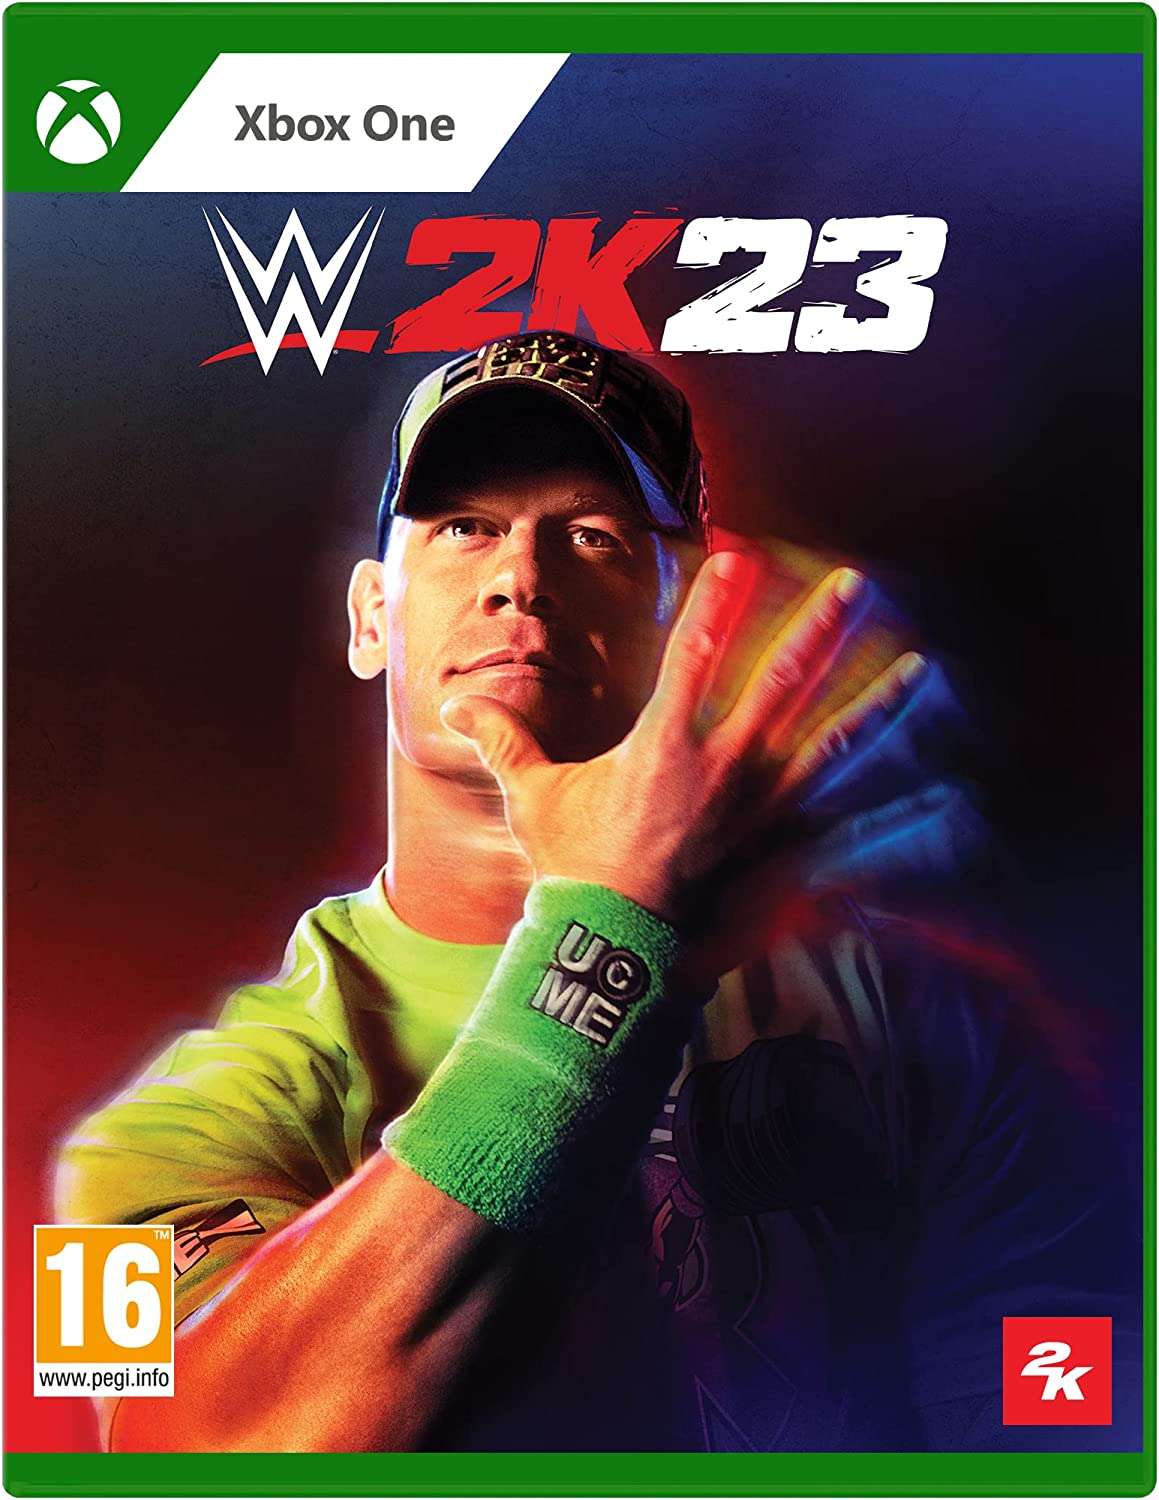 WWE 2K23 for XBOXONE to buy